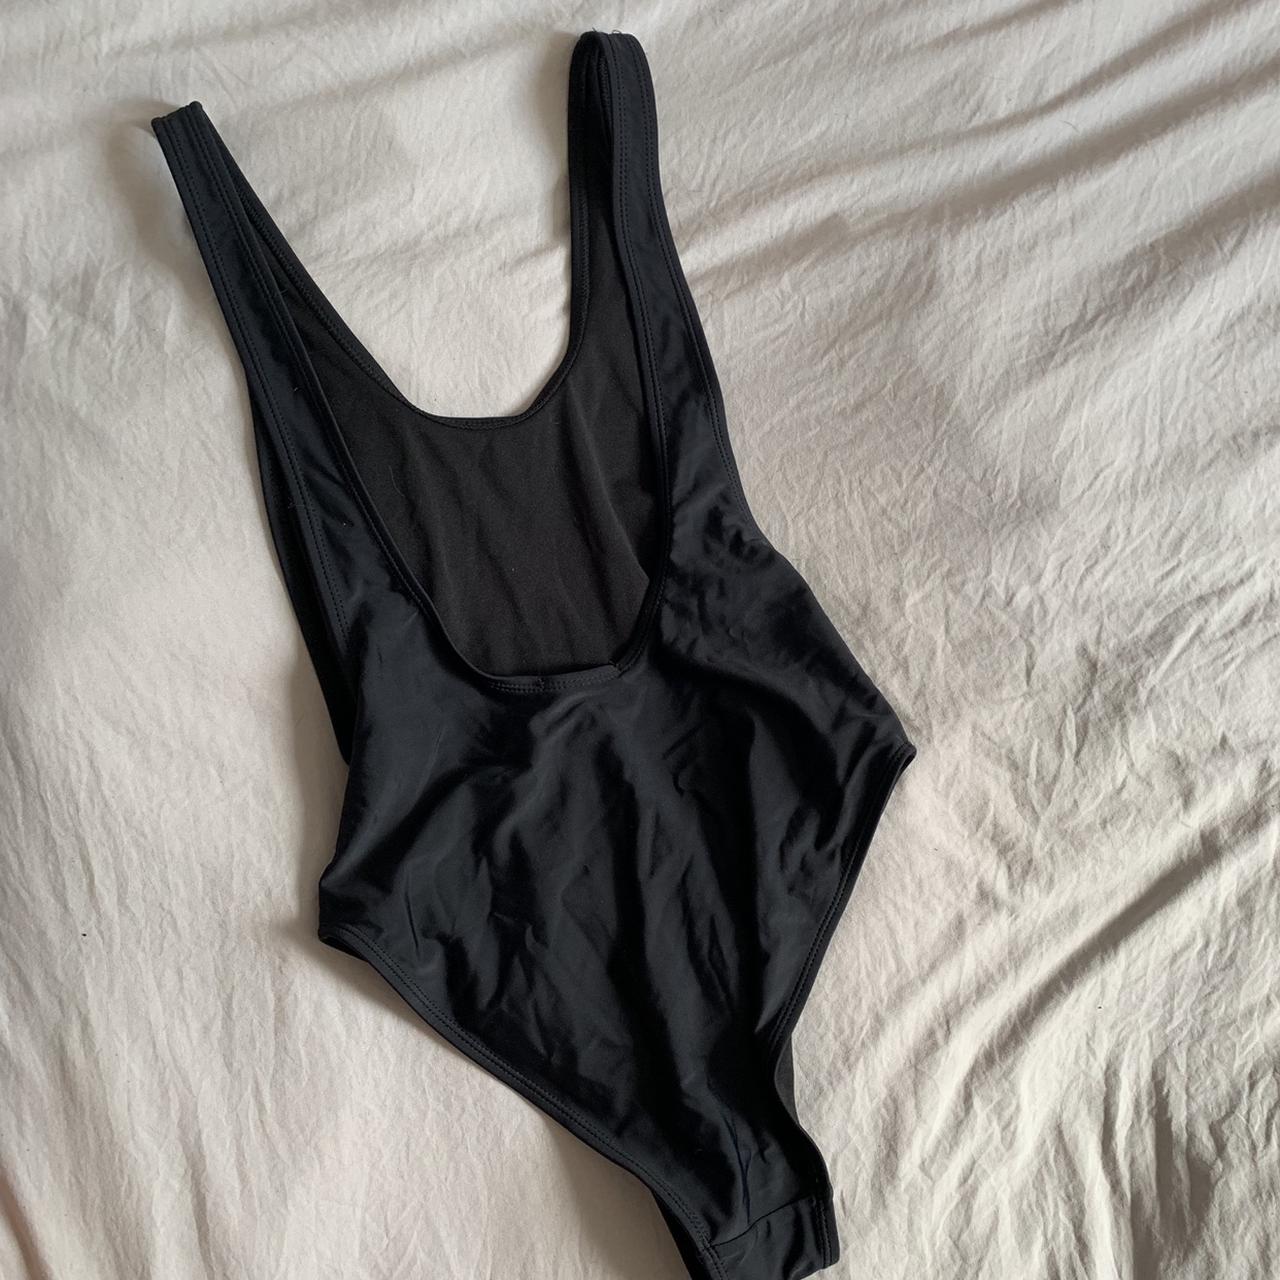 Missguided black high leg swimsuit size 8 Never... - Depop